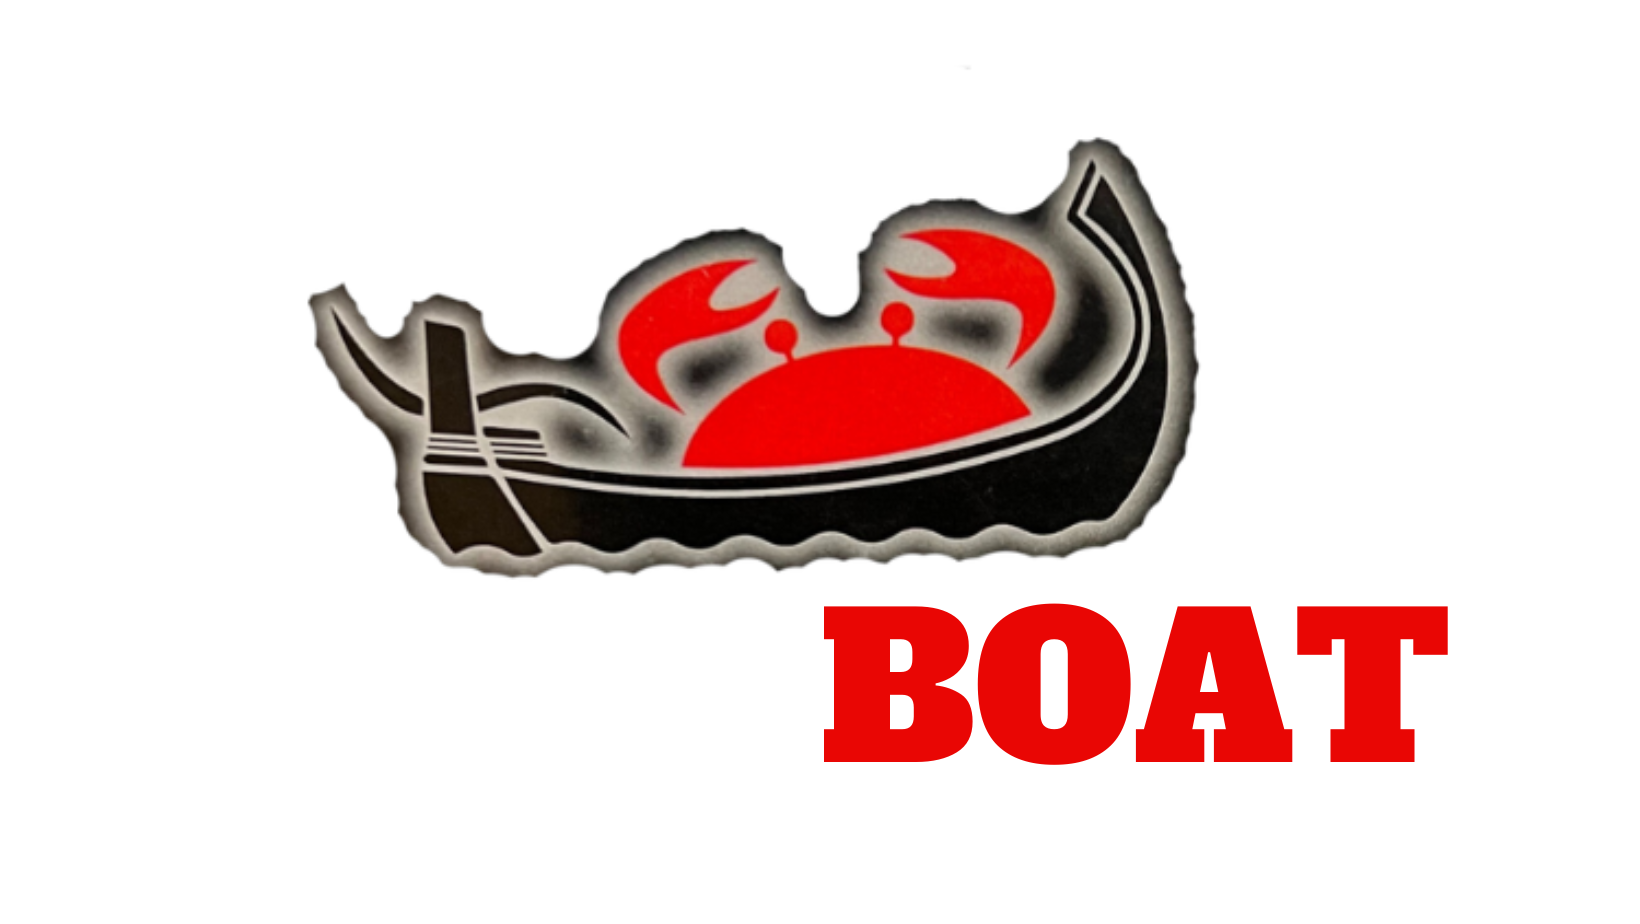 Crab Boat Restaurant & Bar LLC